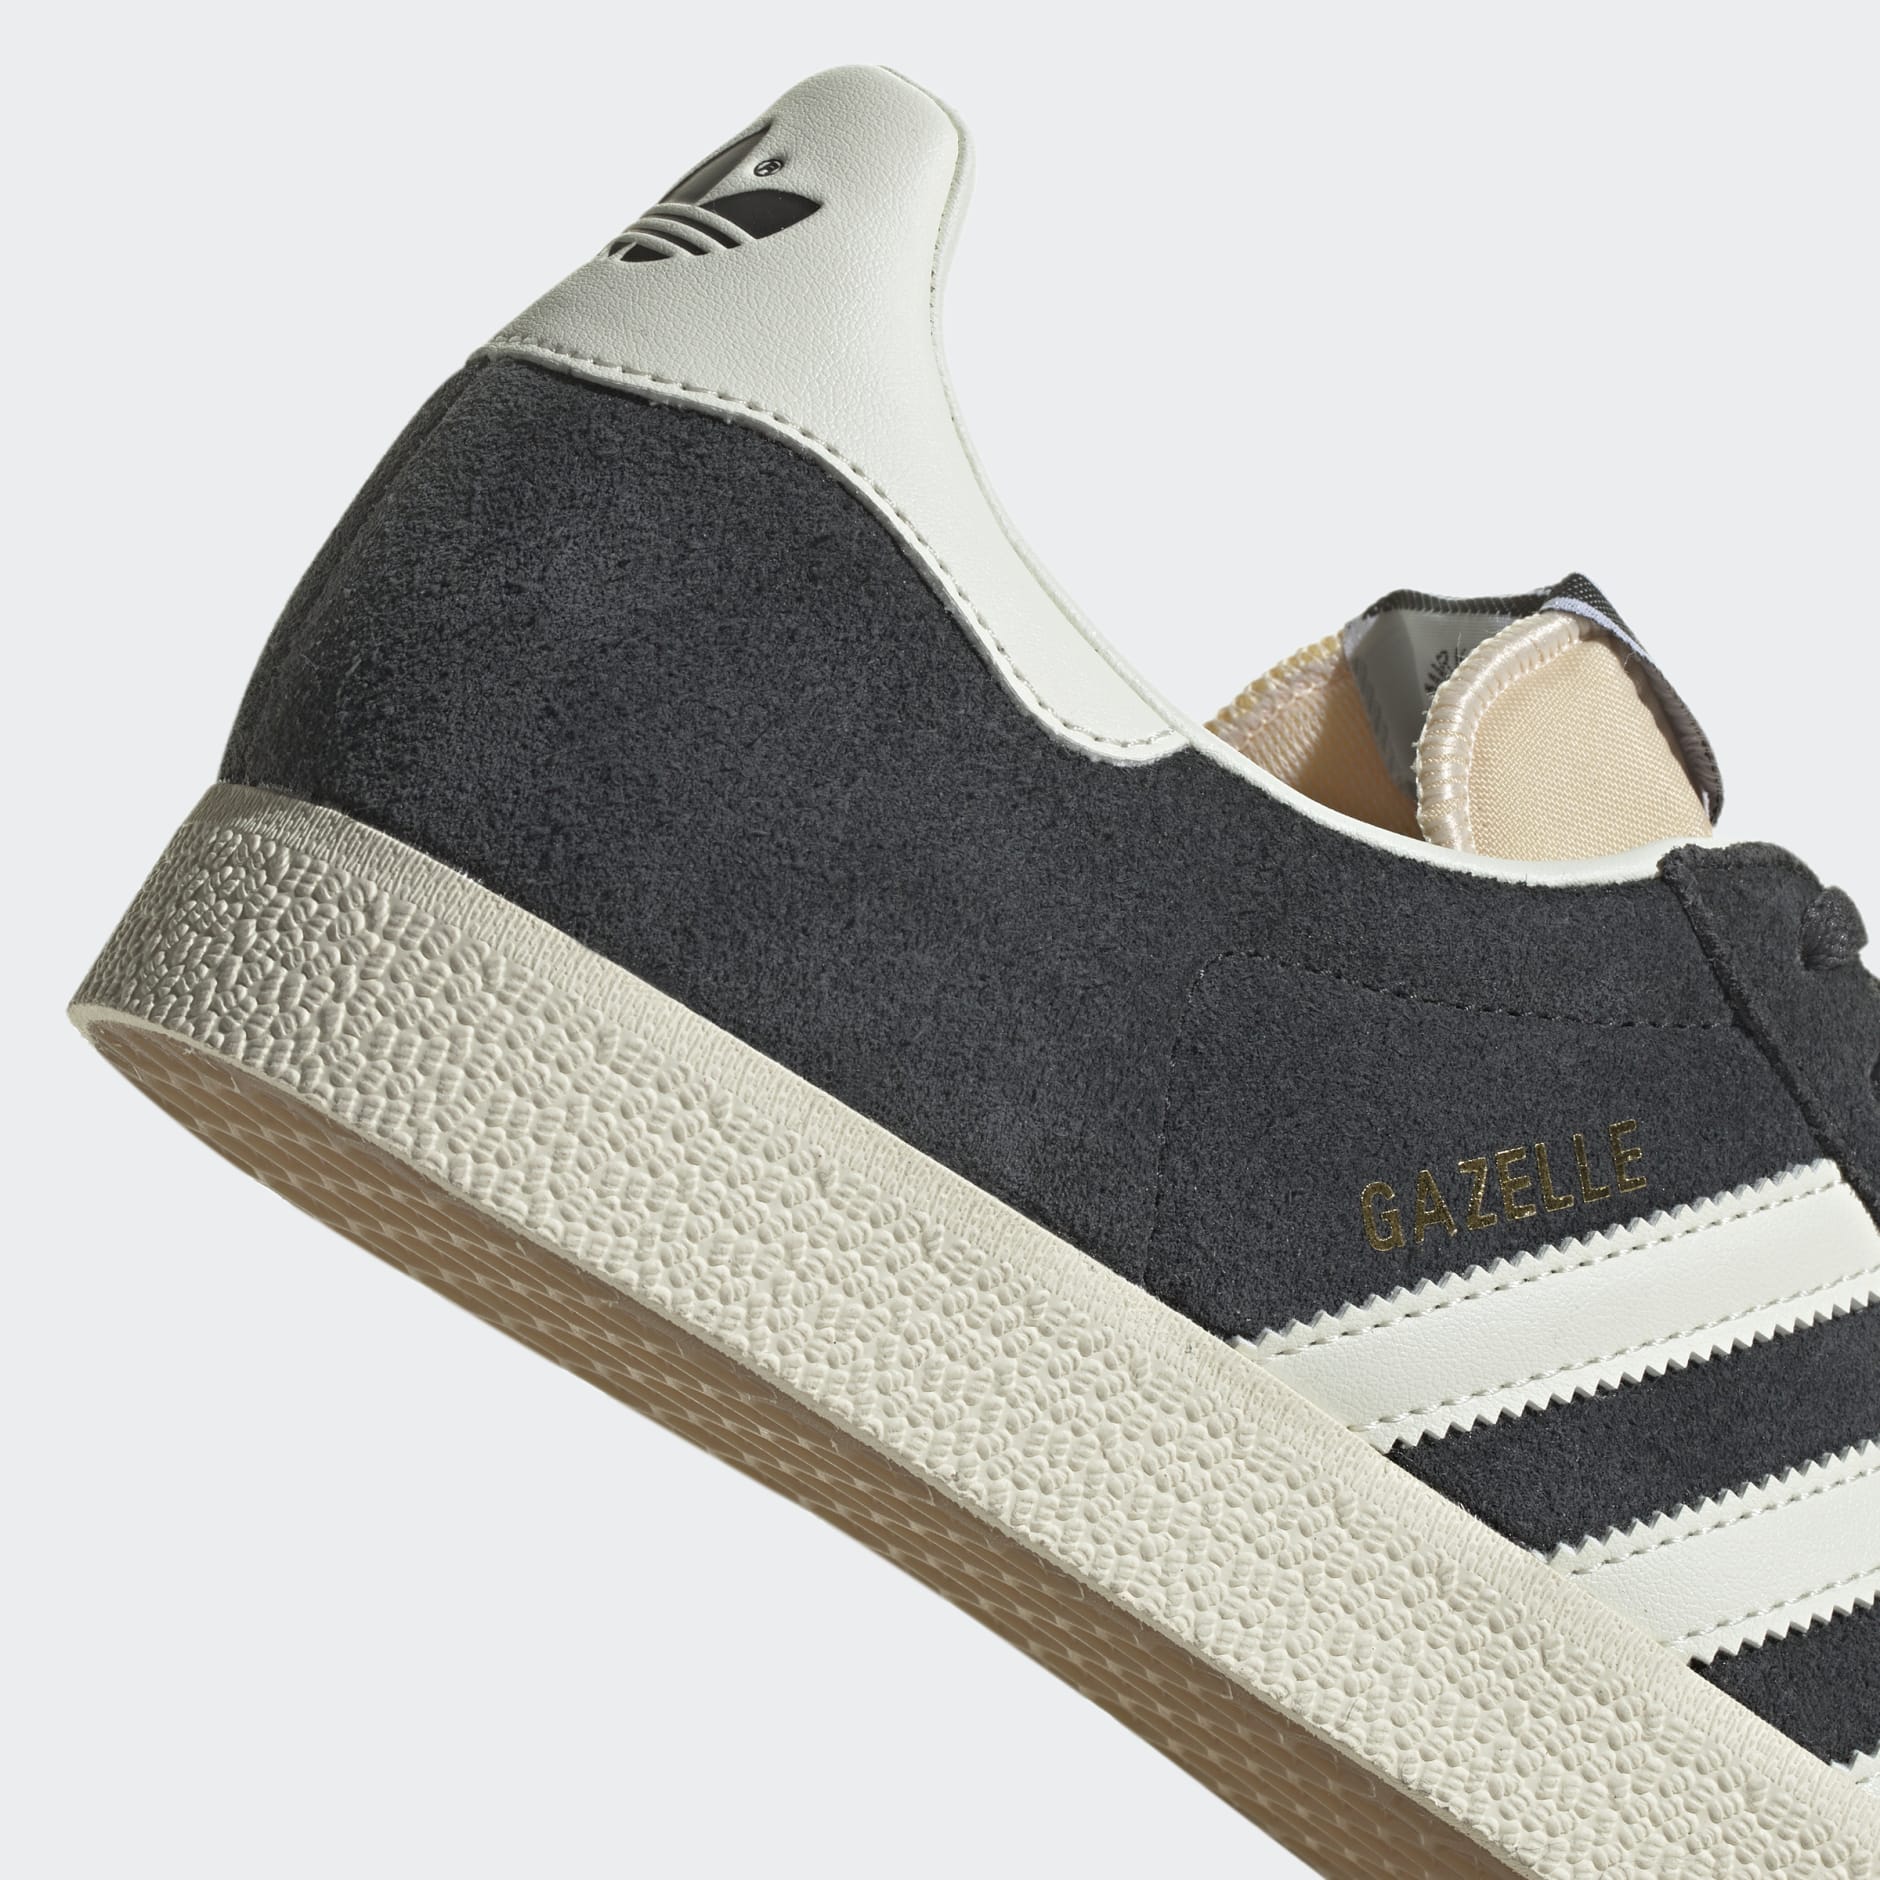 Adidas Originals Gazelle Carbon / Off White